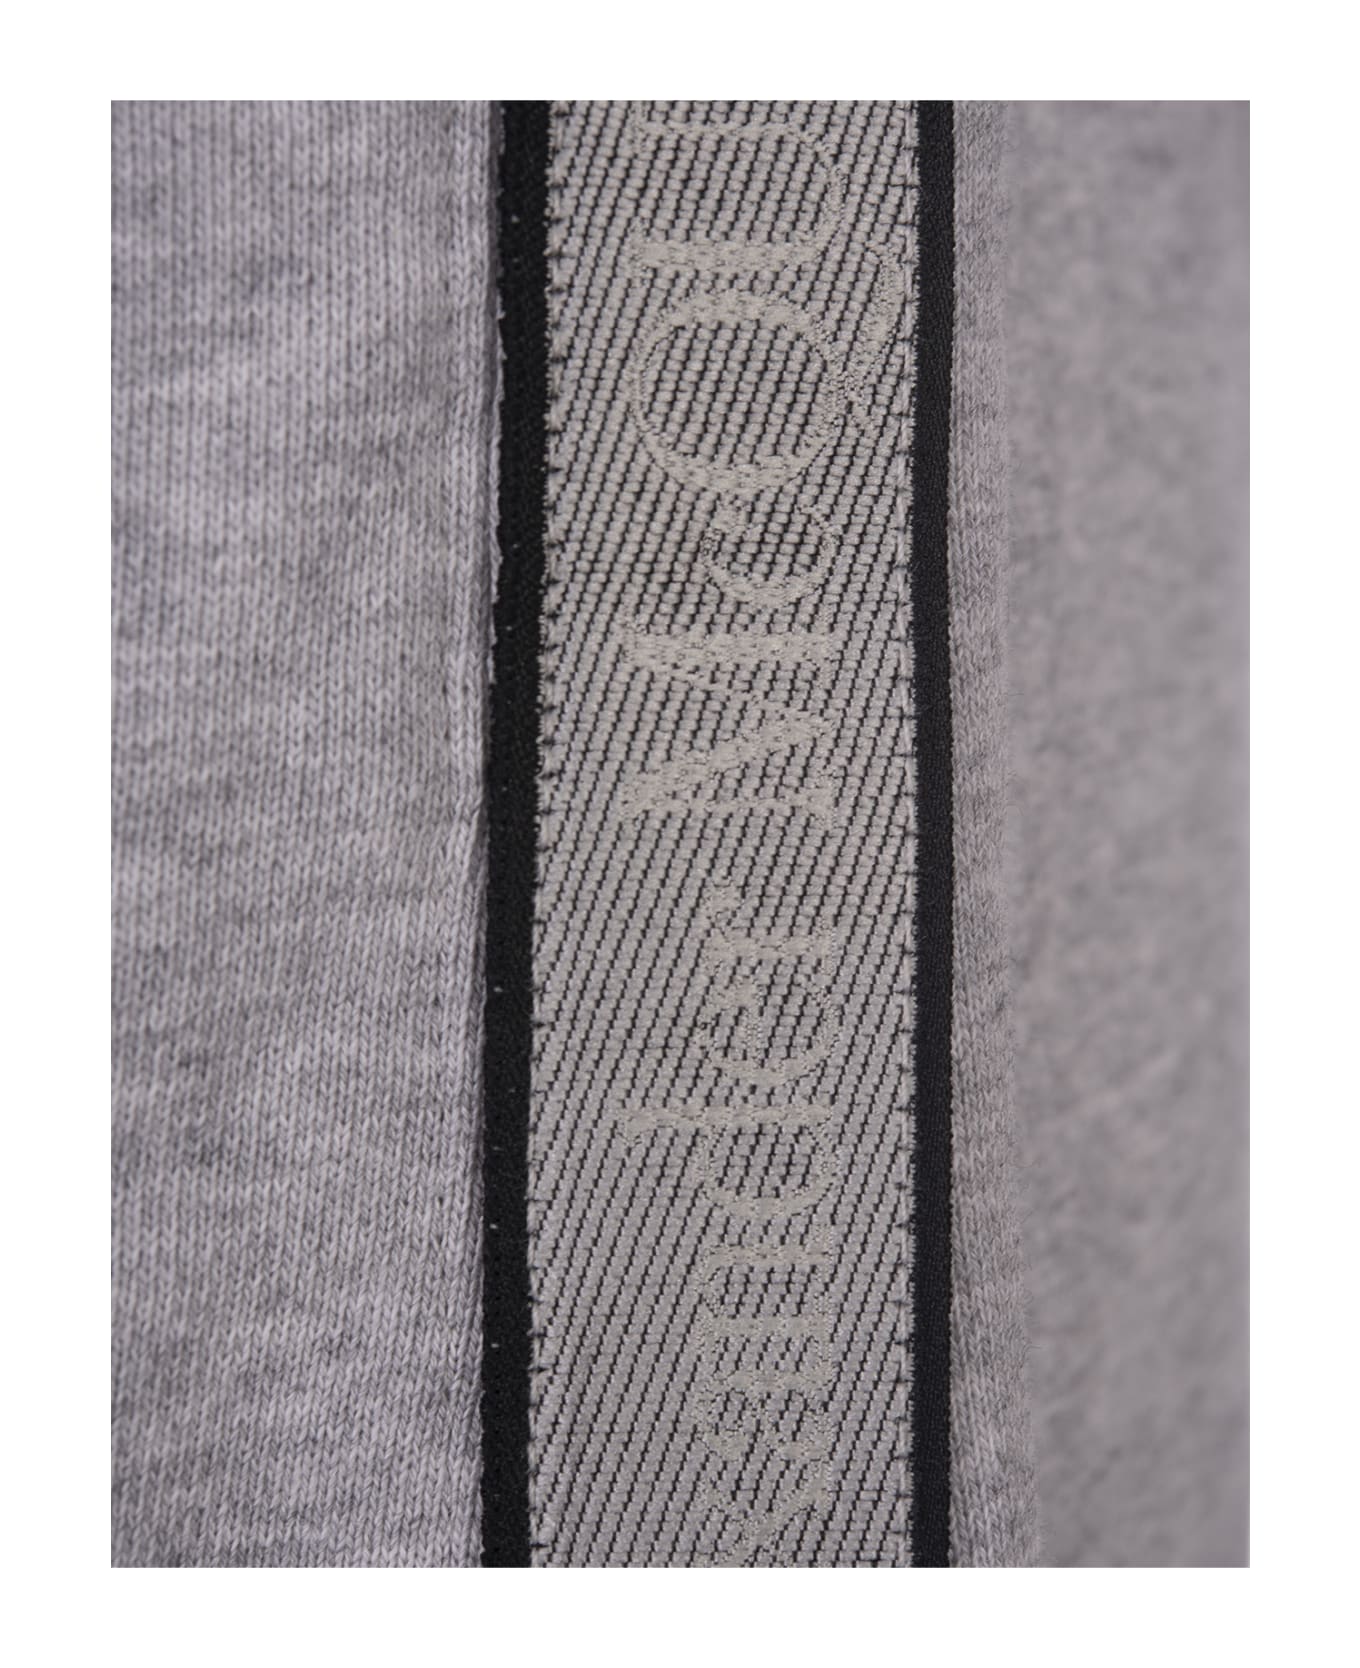 Alexander McQueen Logo Tape Detail Shorts - Grey ショートパンツ